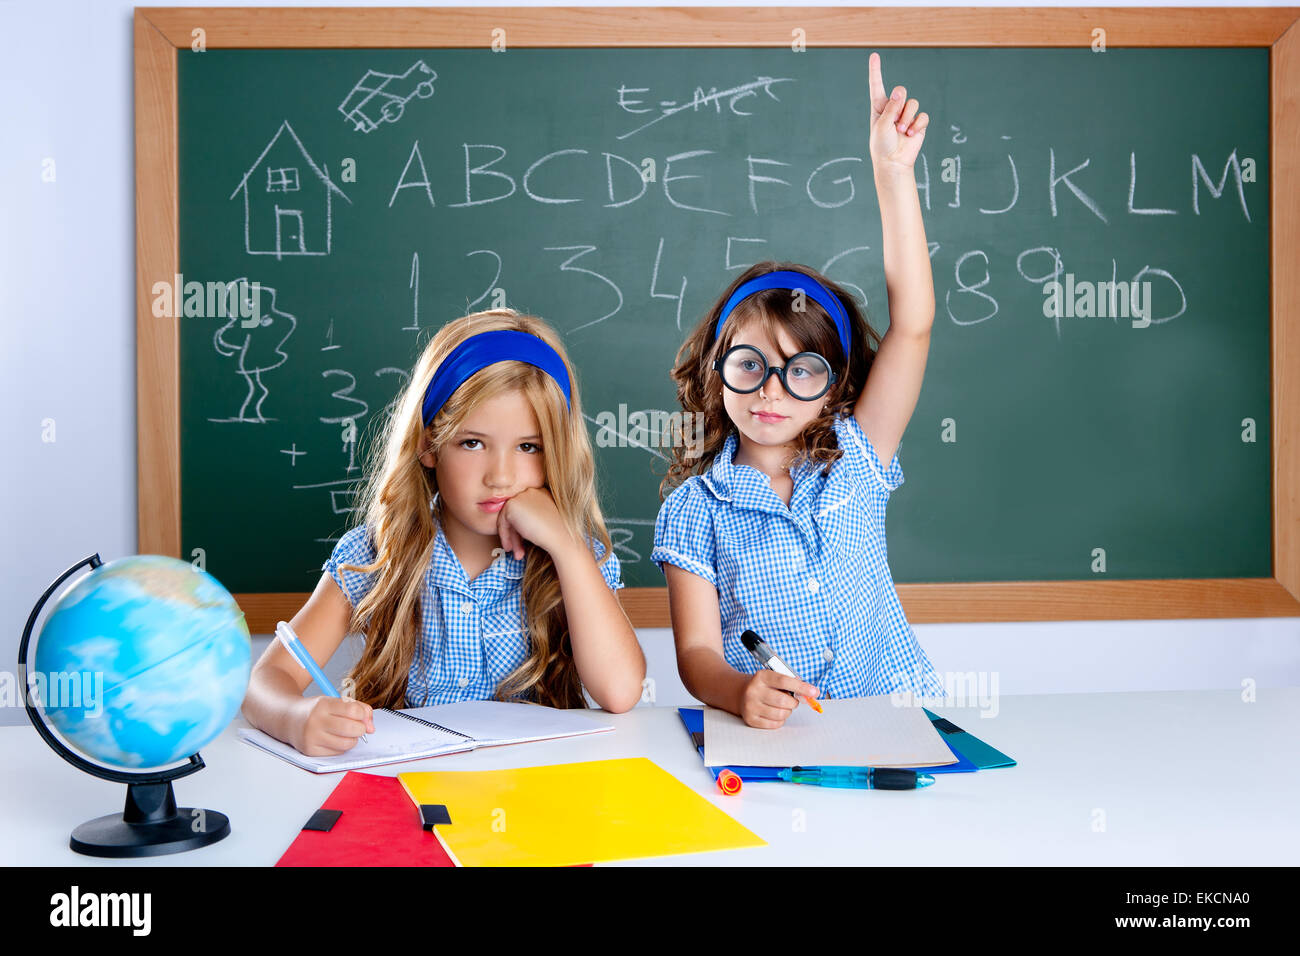 clever nerd student girl in classroom raising hand Stock Photo: 80800104 - Alamy